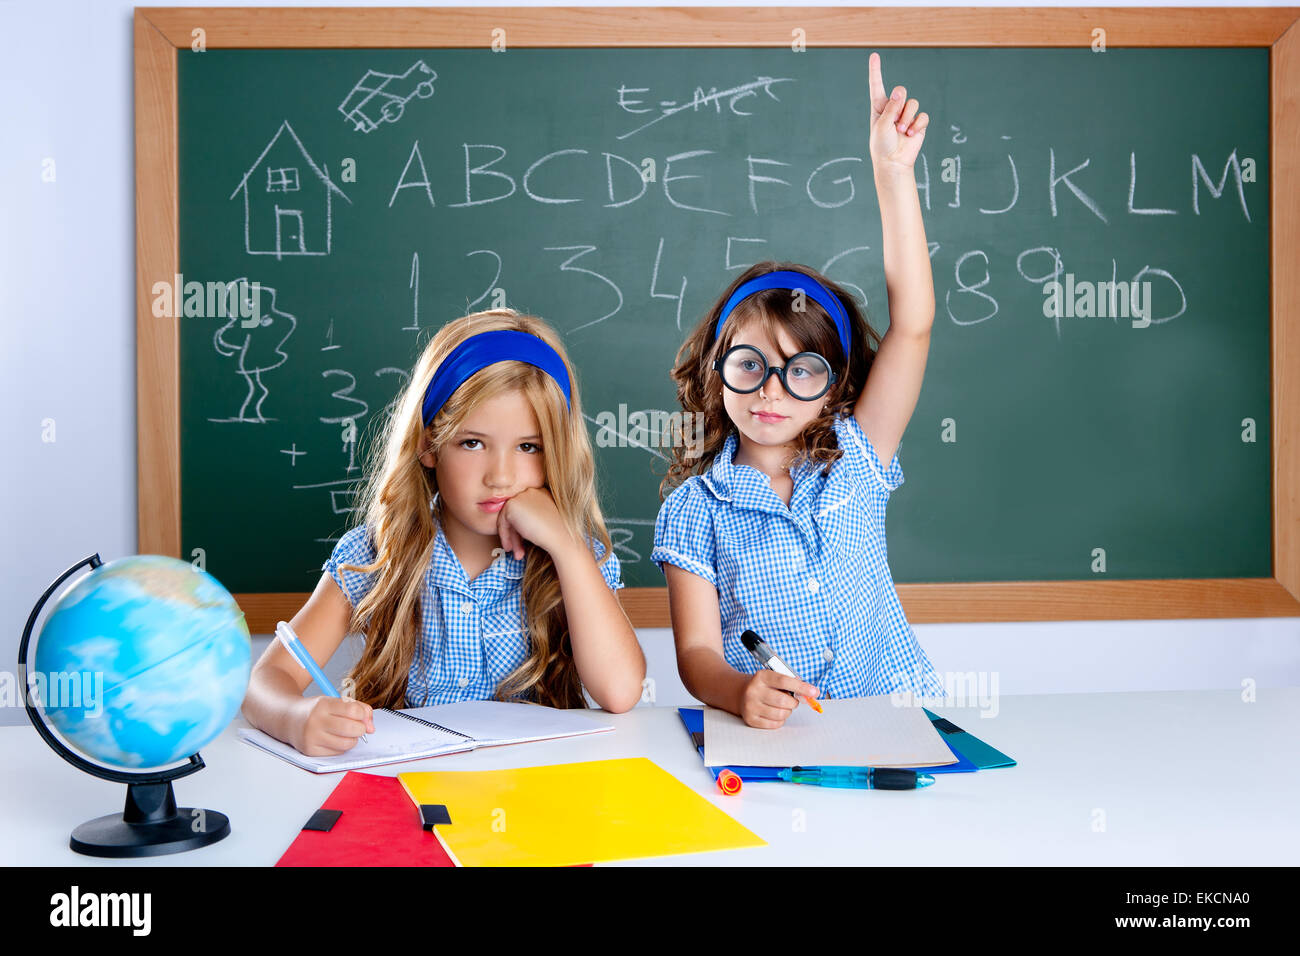 clever nerd student girl in classroom raising hand Stock Photo: 80800104 - Alamy